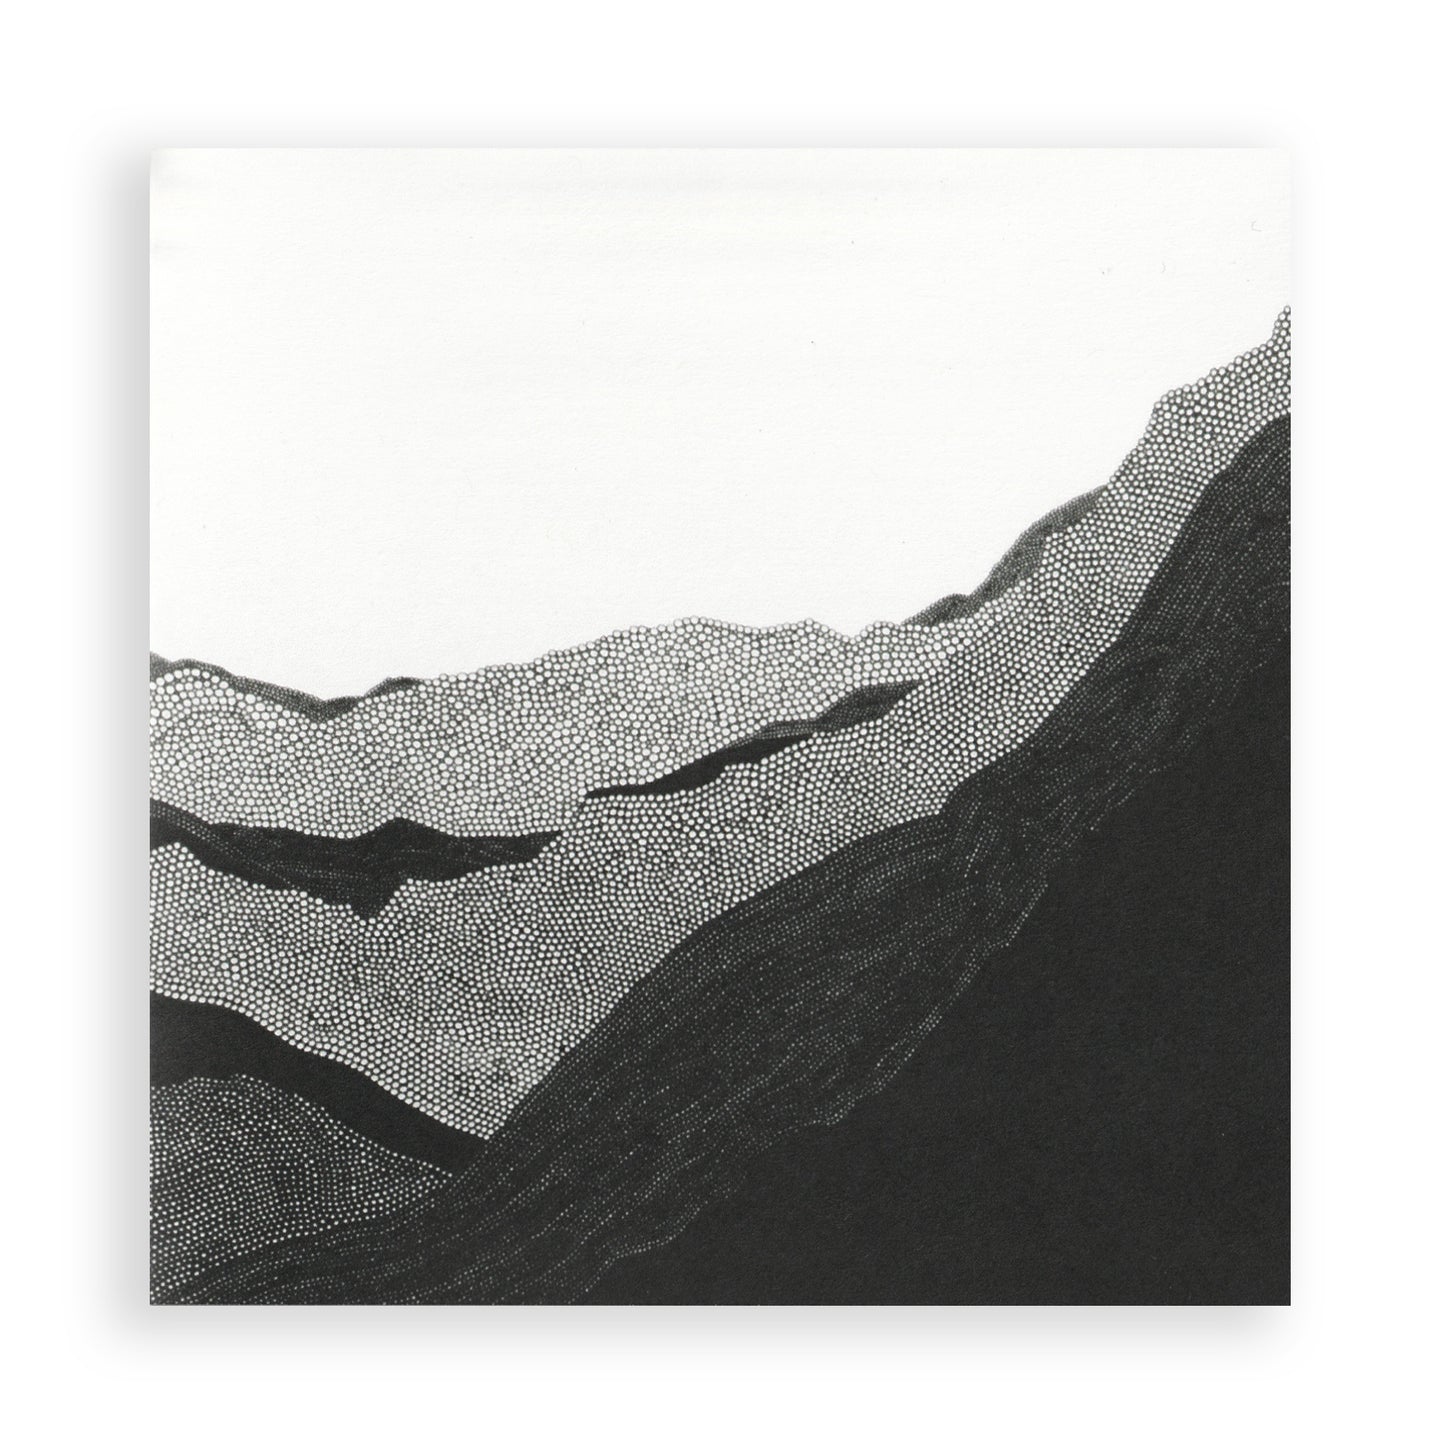 Mountains in Korea 2019_01 Art Card Print